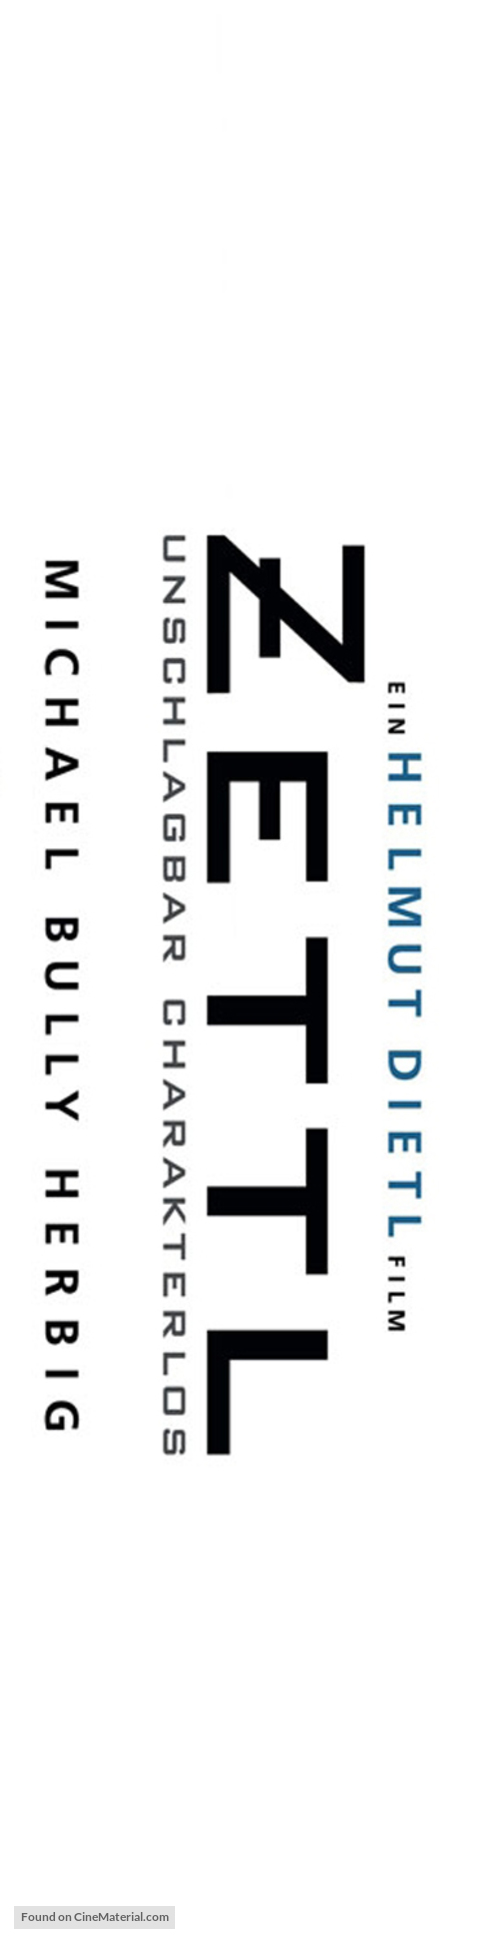 Zettl - German Logo